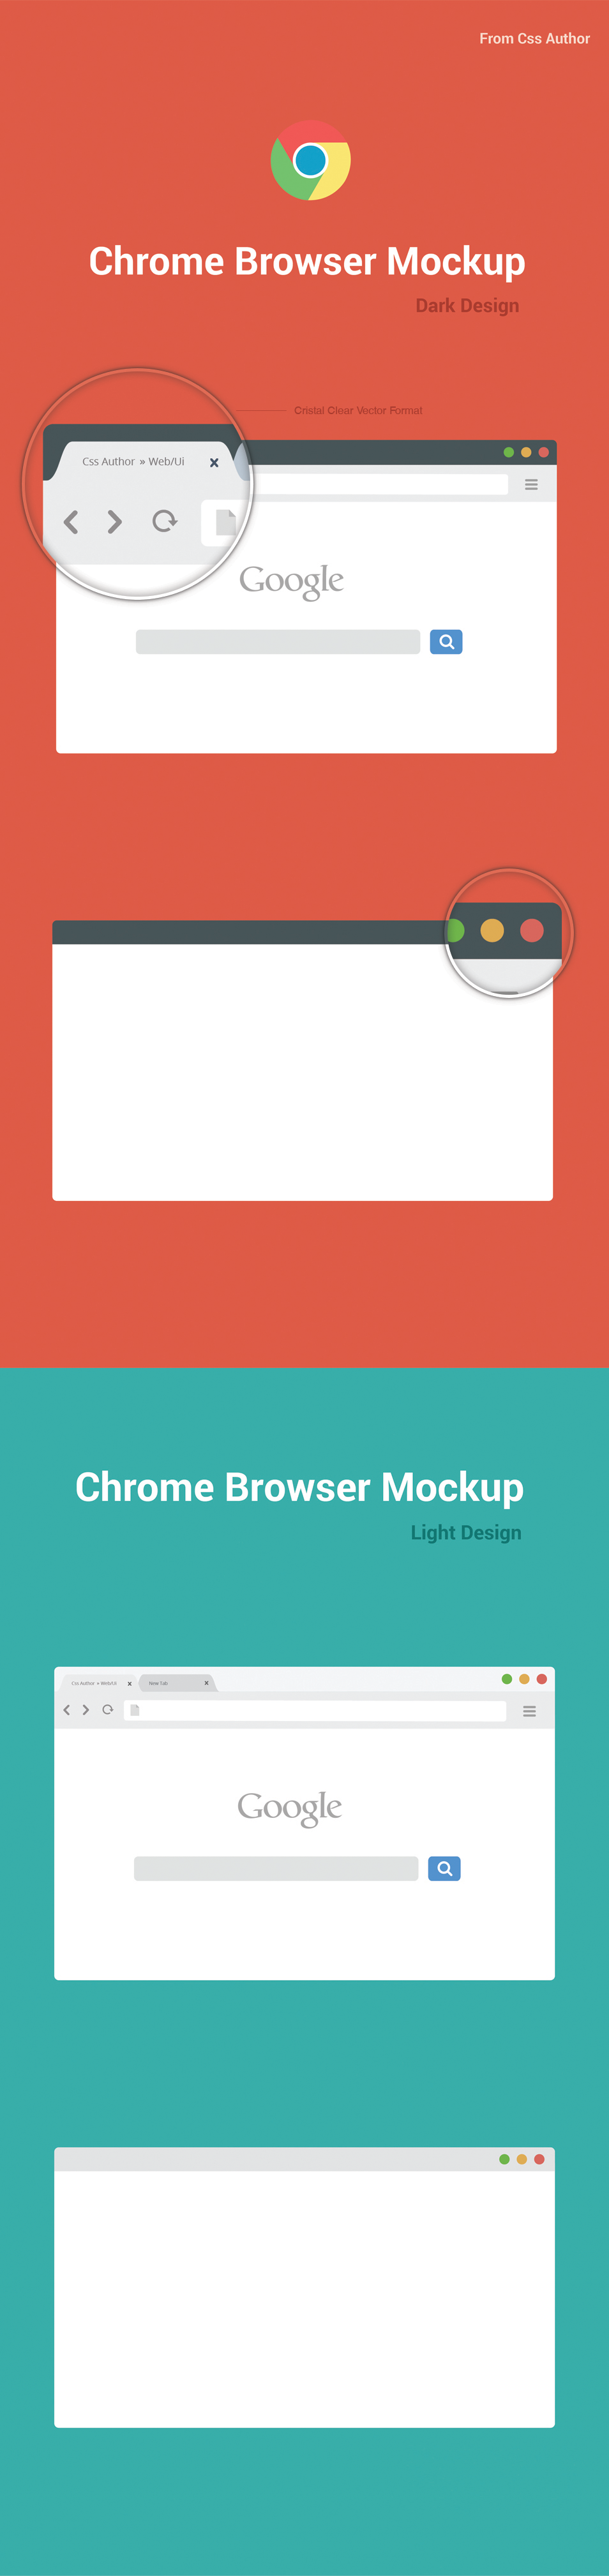 Chrome browser mockup